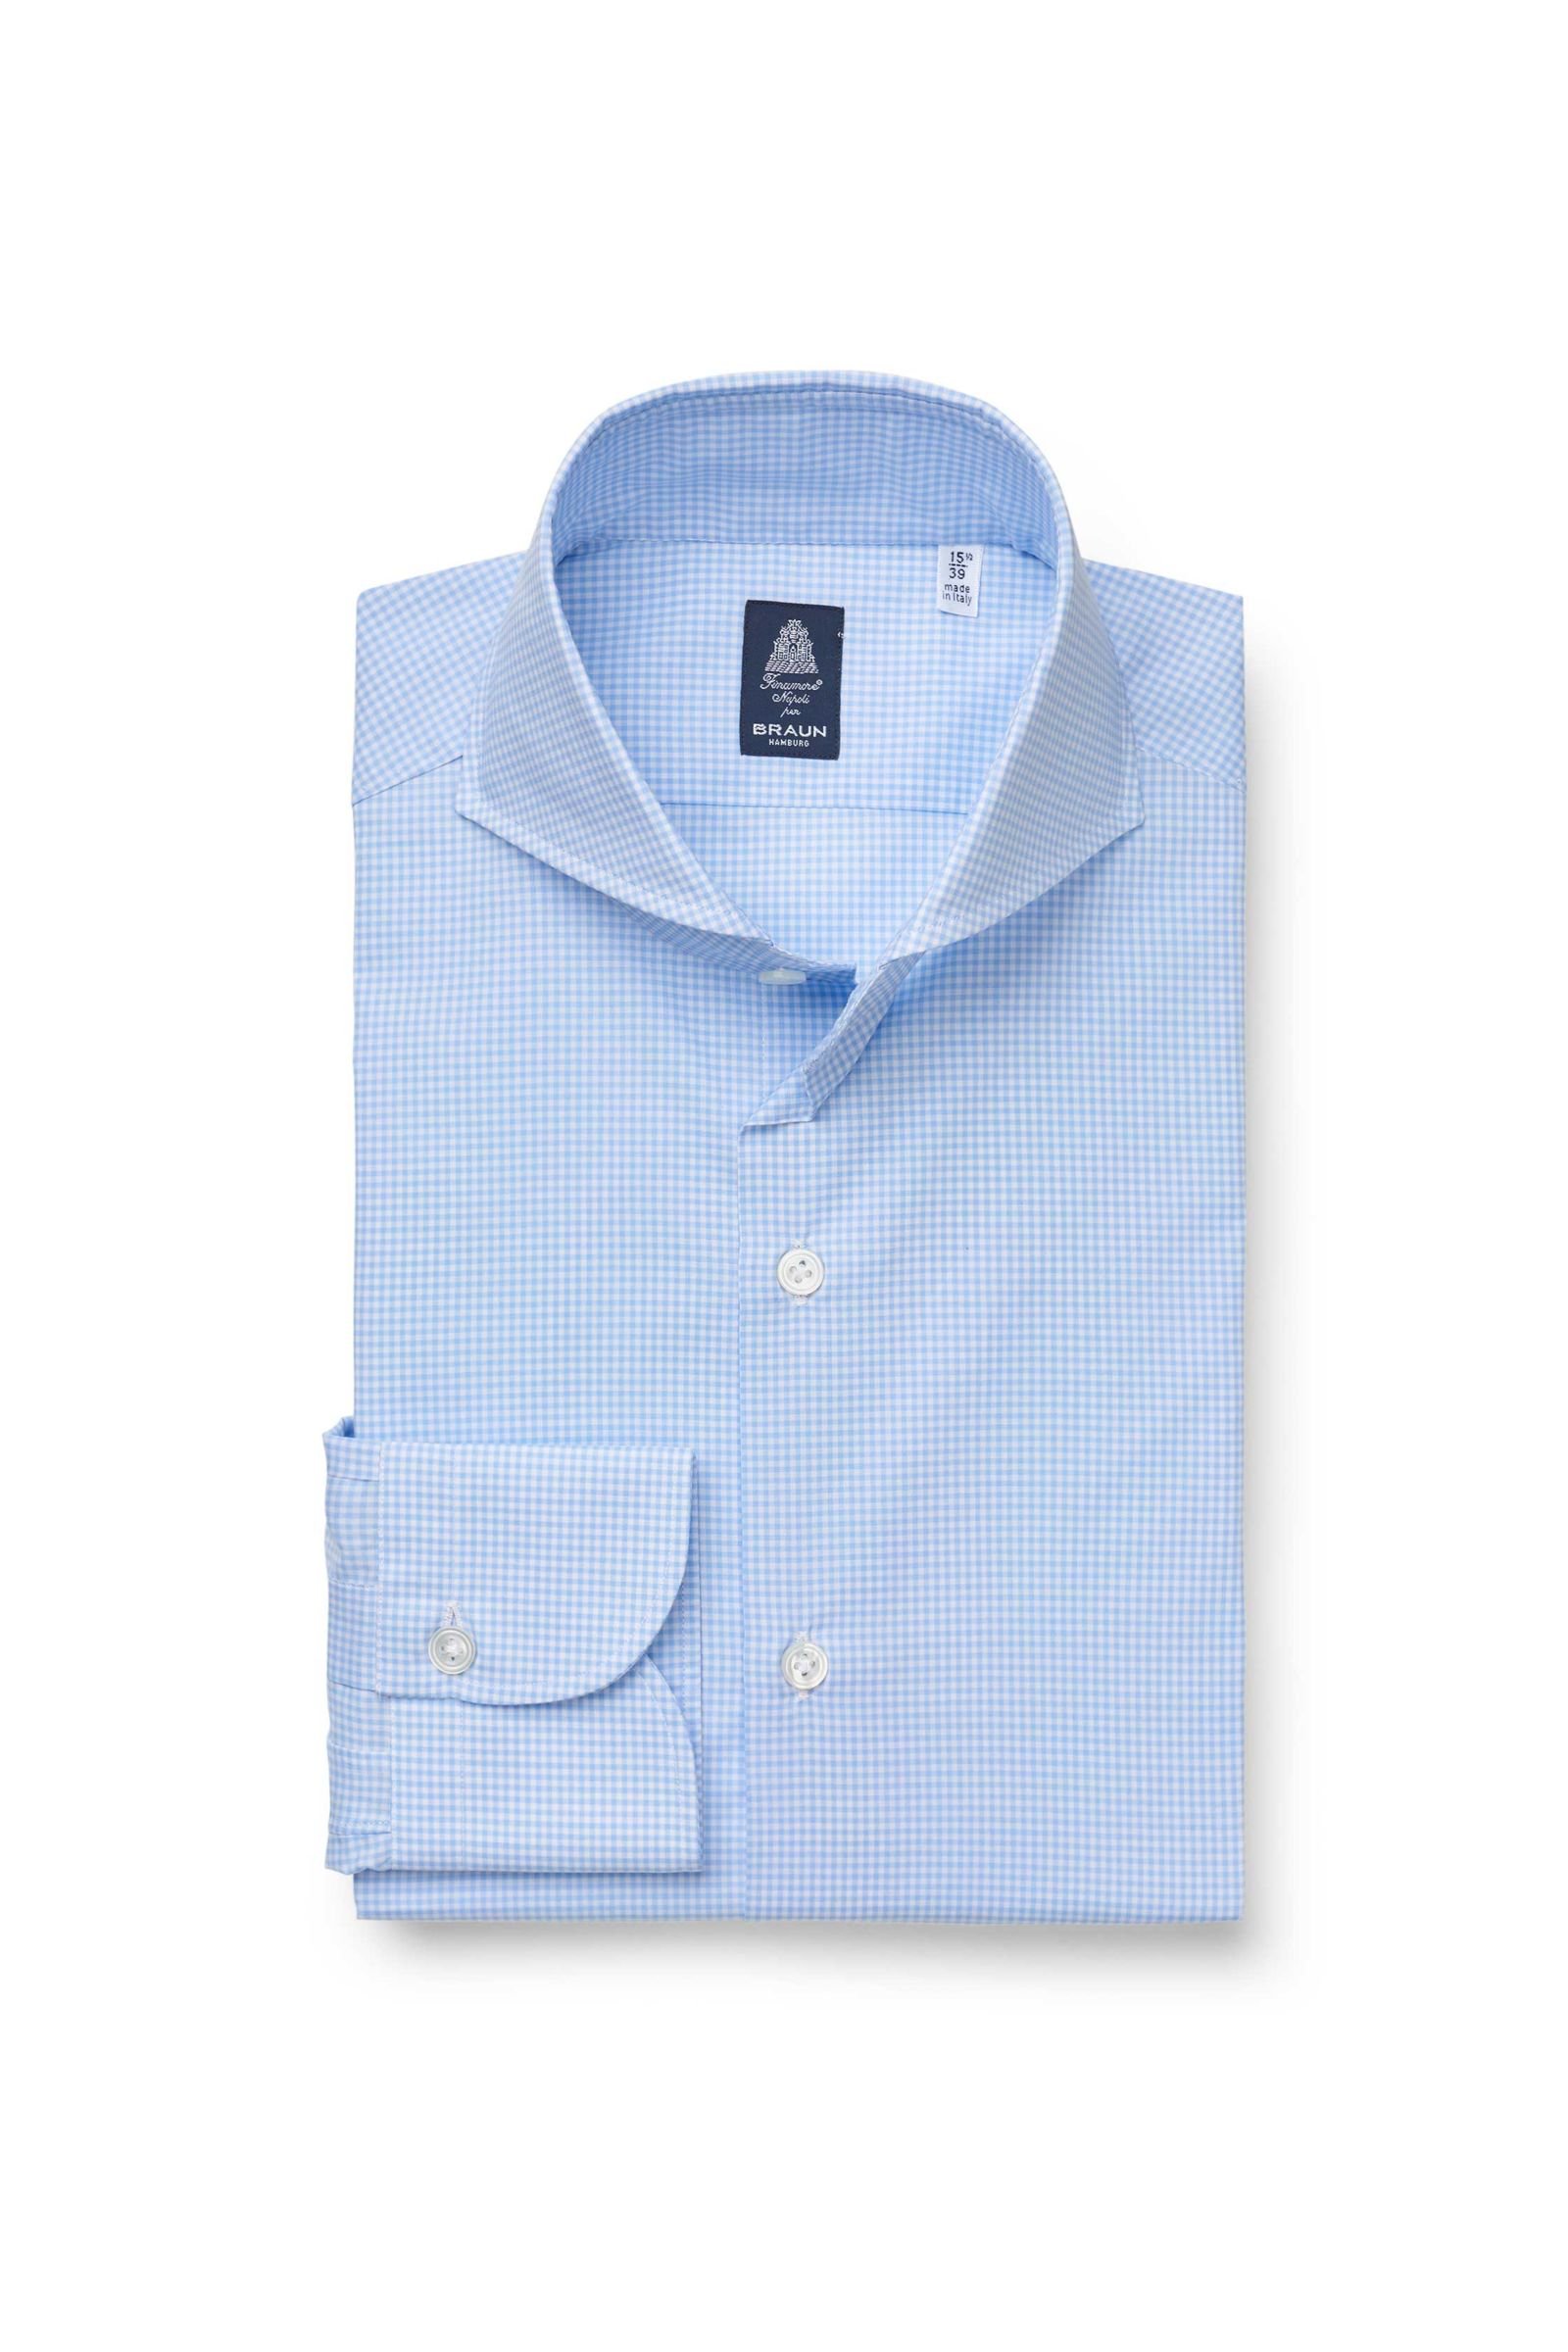 Business shirt 'Sergio Napoli' shark collar light blue checked